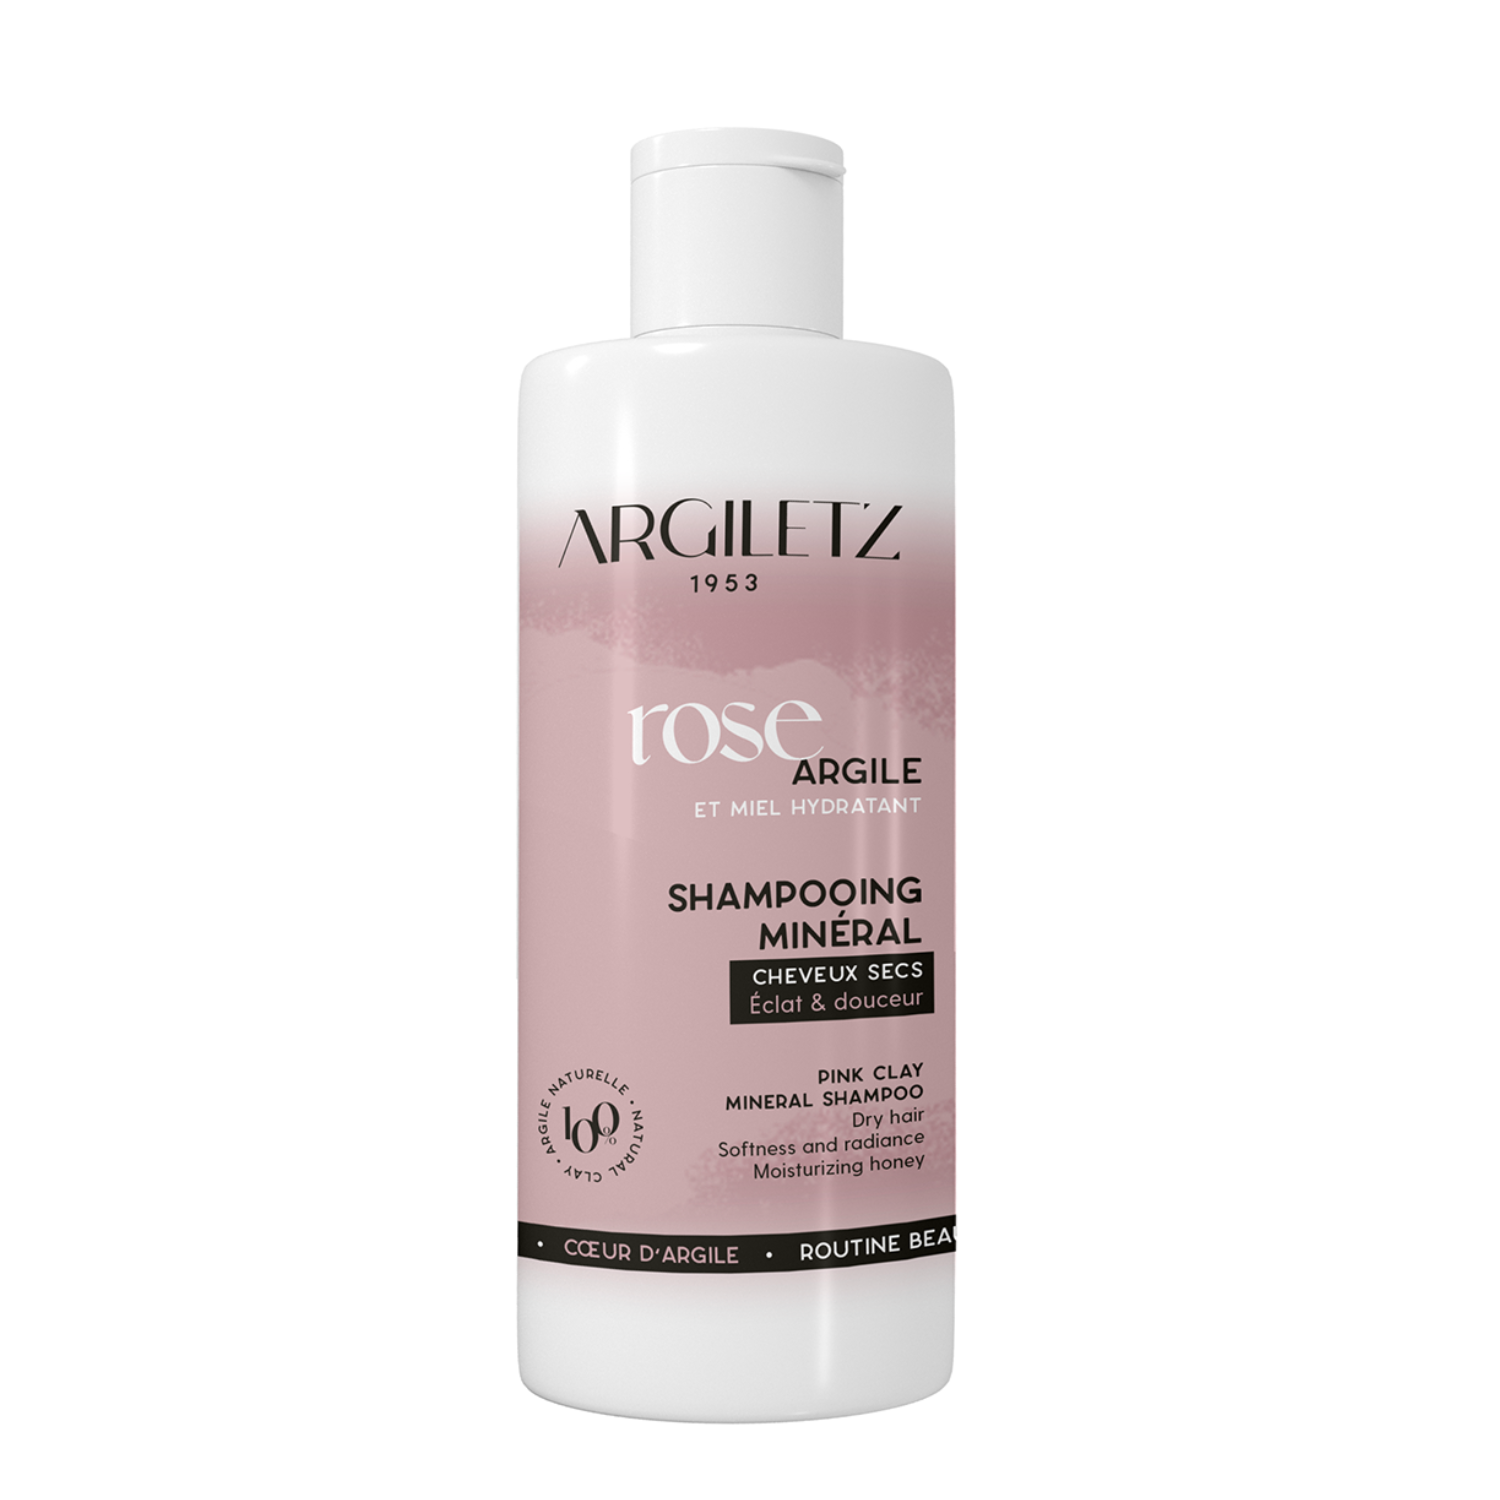 Shampoo Dry Hair - Pink Clay